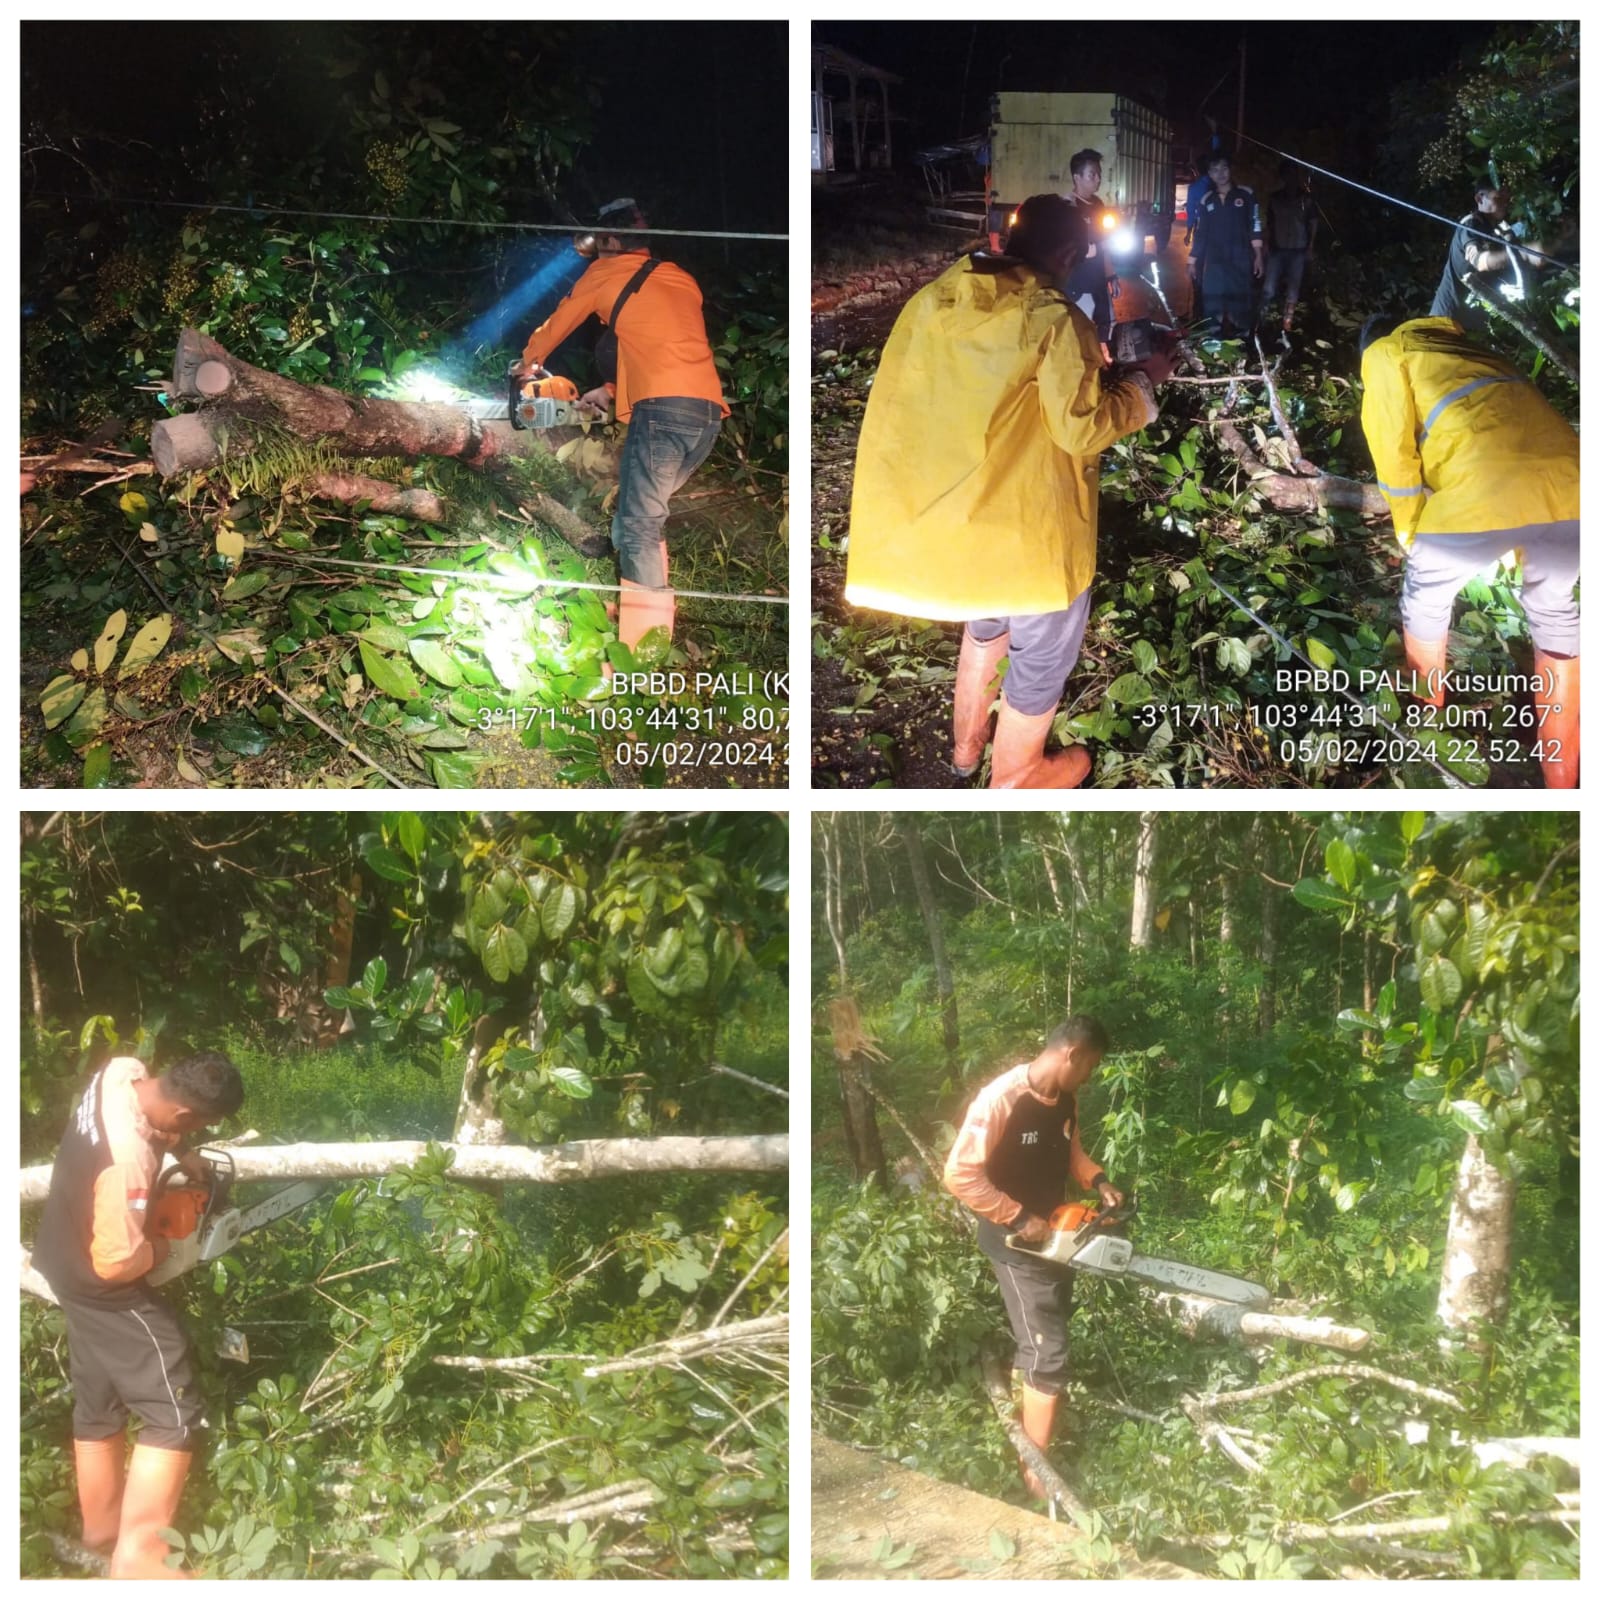 BPBD Kabupaten PALI menghimbau masyarakat agar mewaspadai potensi pohon tumbang